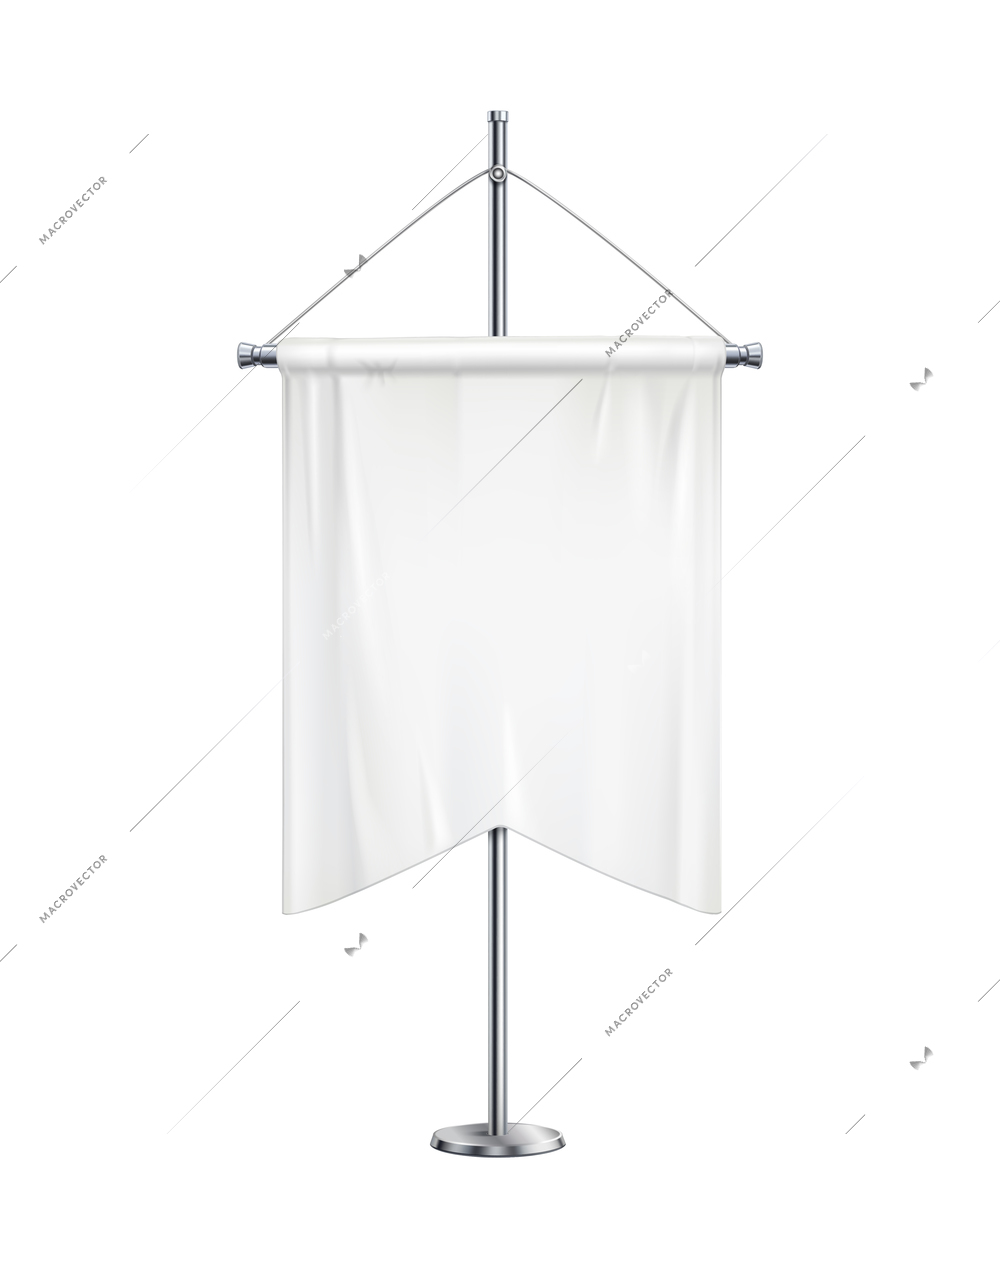 Realistic blank white satin advertising pennant banner on pole vector illustration